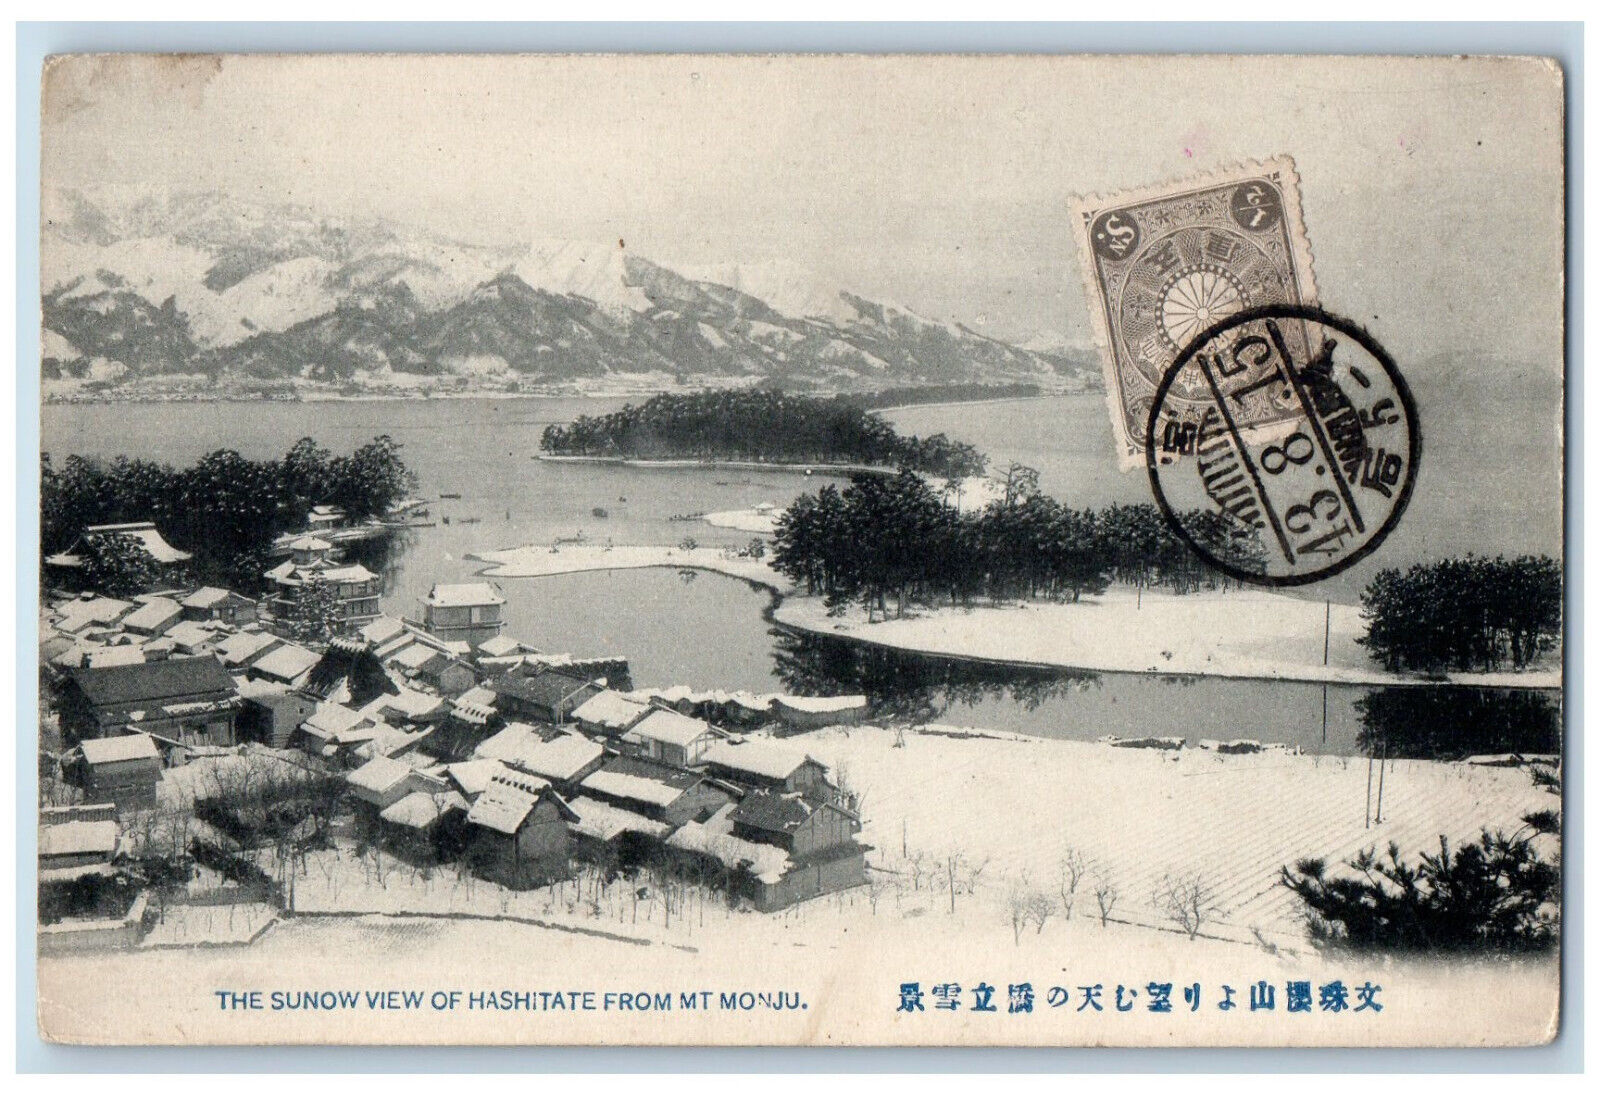 Fukui Japan Postcard Sunow View of Hashitate from Mt. Monju 1943 Vintage